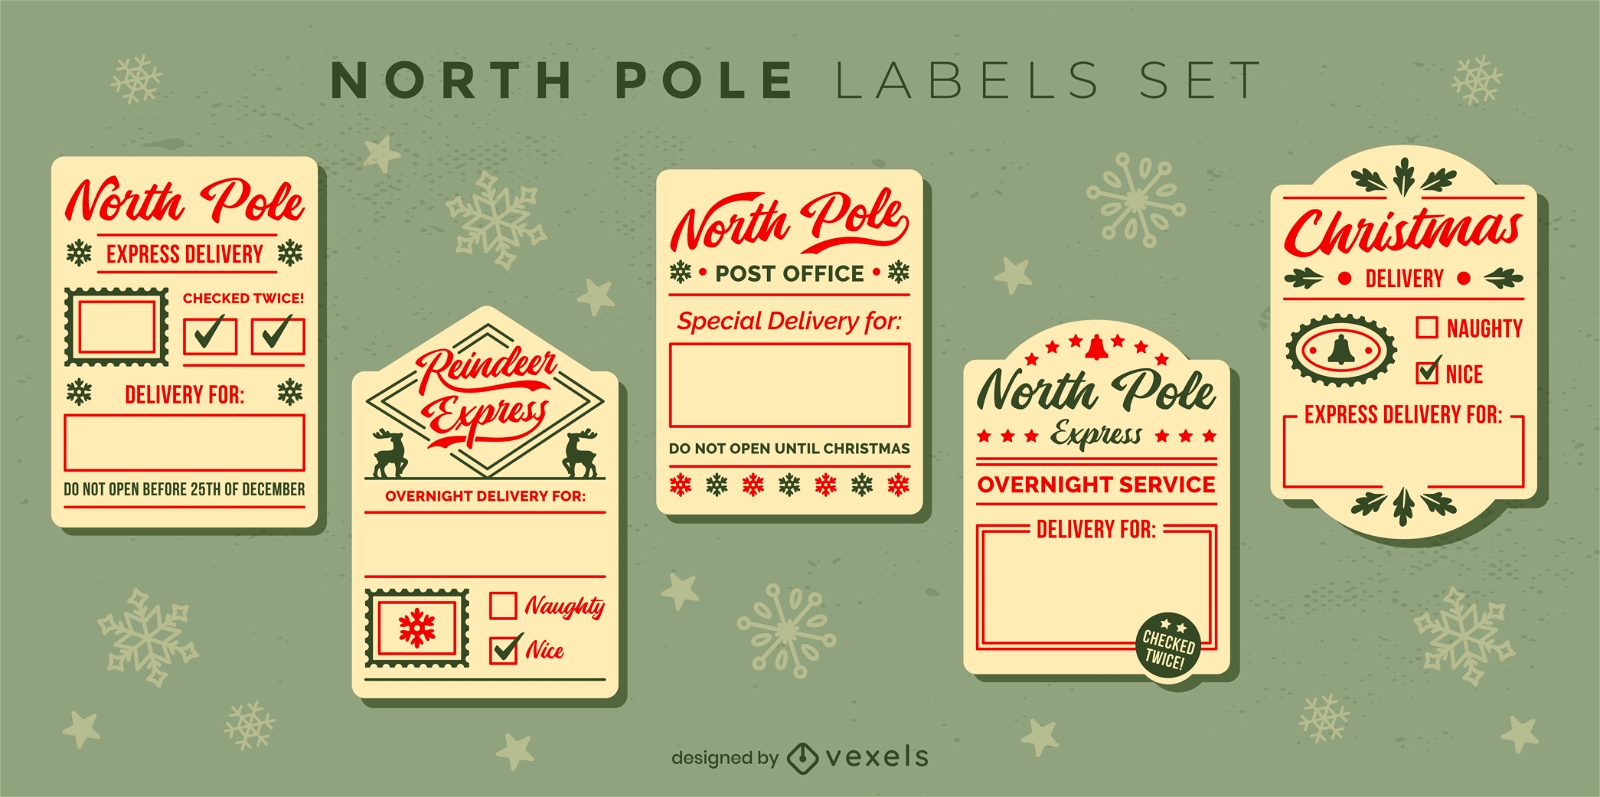 Christmas North Pole labels set